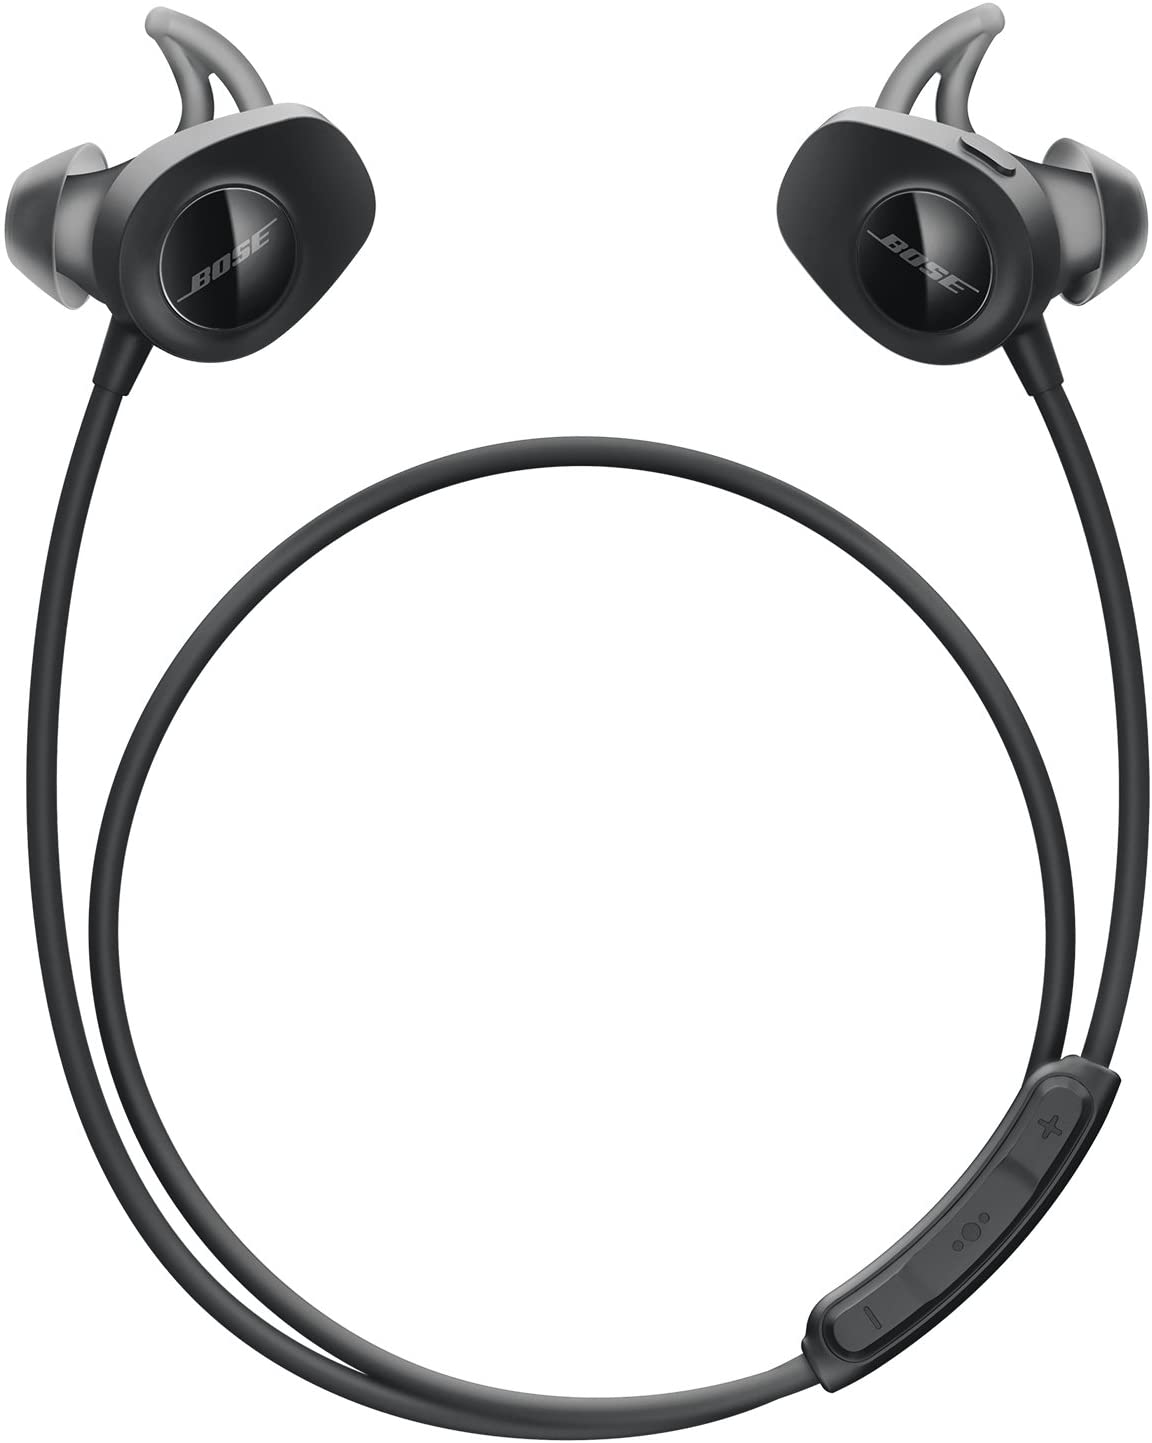 Bose SoundSport Wireless Sweatproof Bluetooth Headphones for Sports - Black (Certified Refurbished)